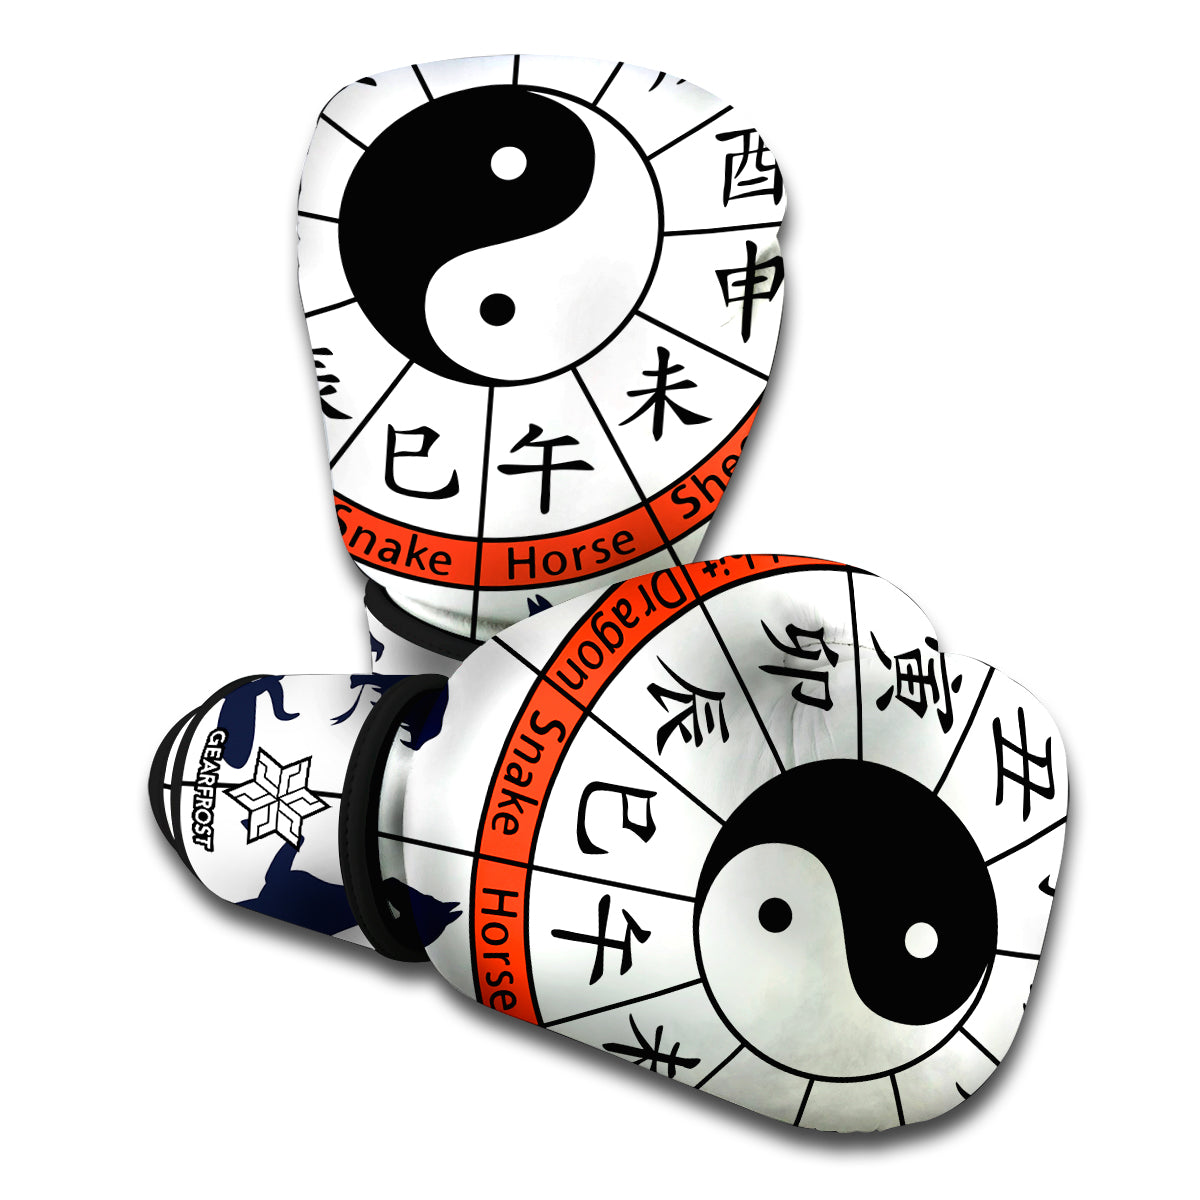 Yin Yang Chinese Zodiac Wheel Print Boxing Gloves